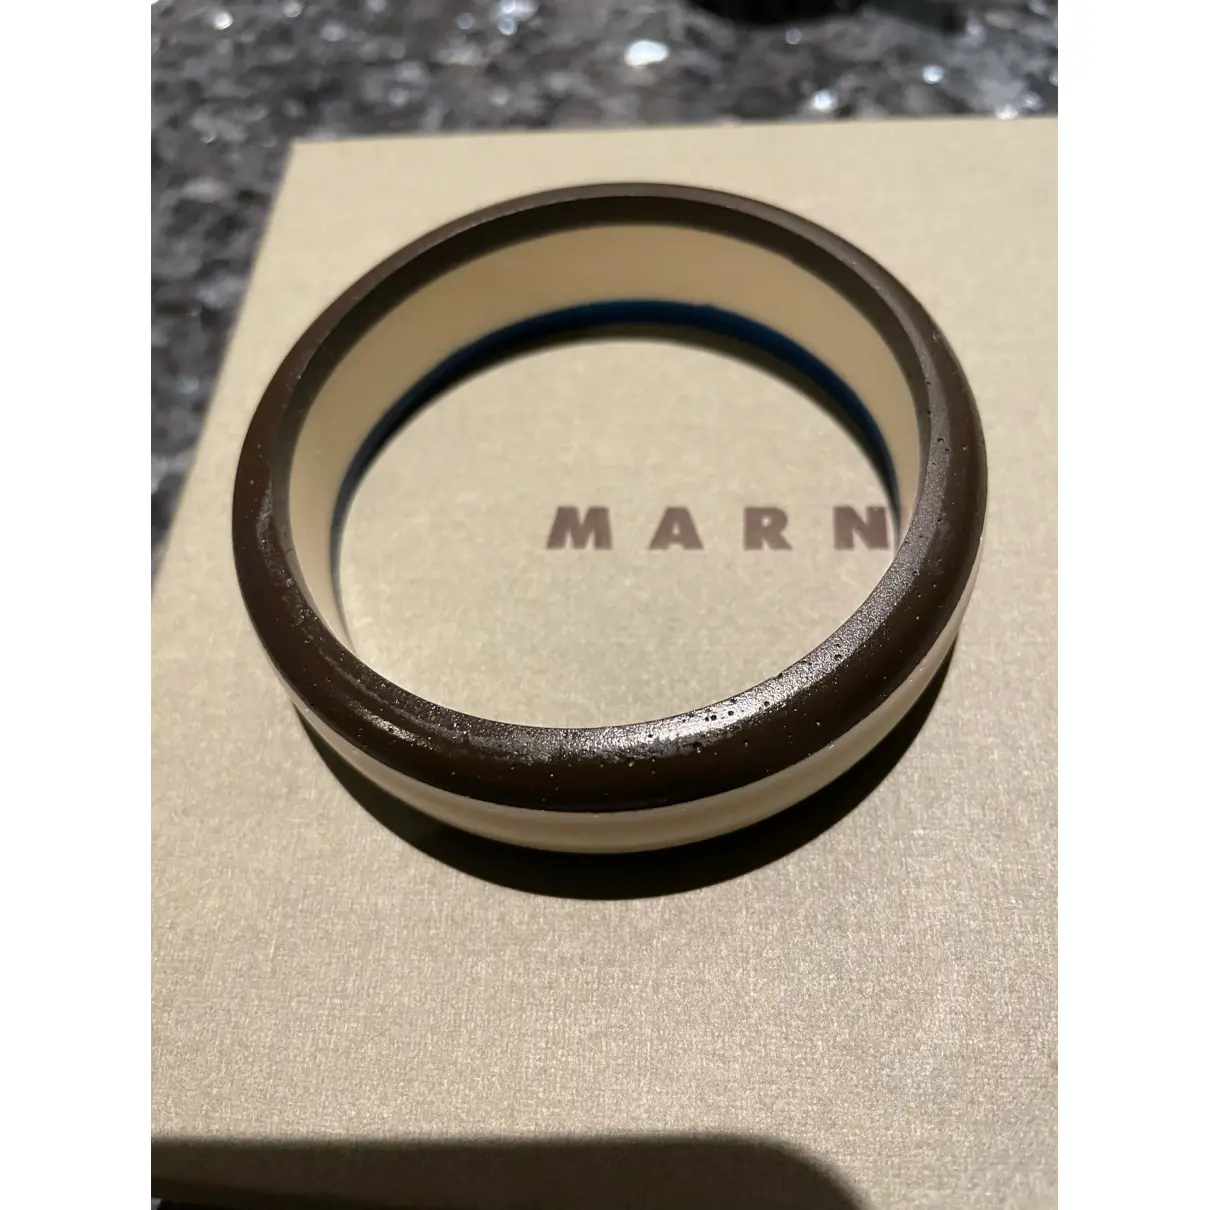 Buy Marni Bracelet online